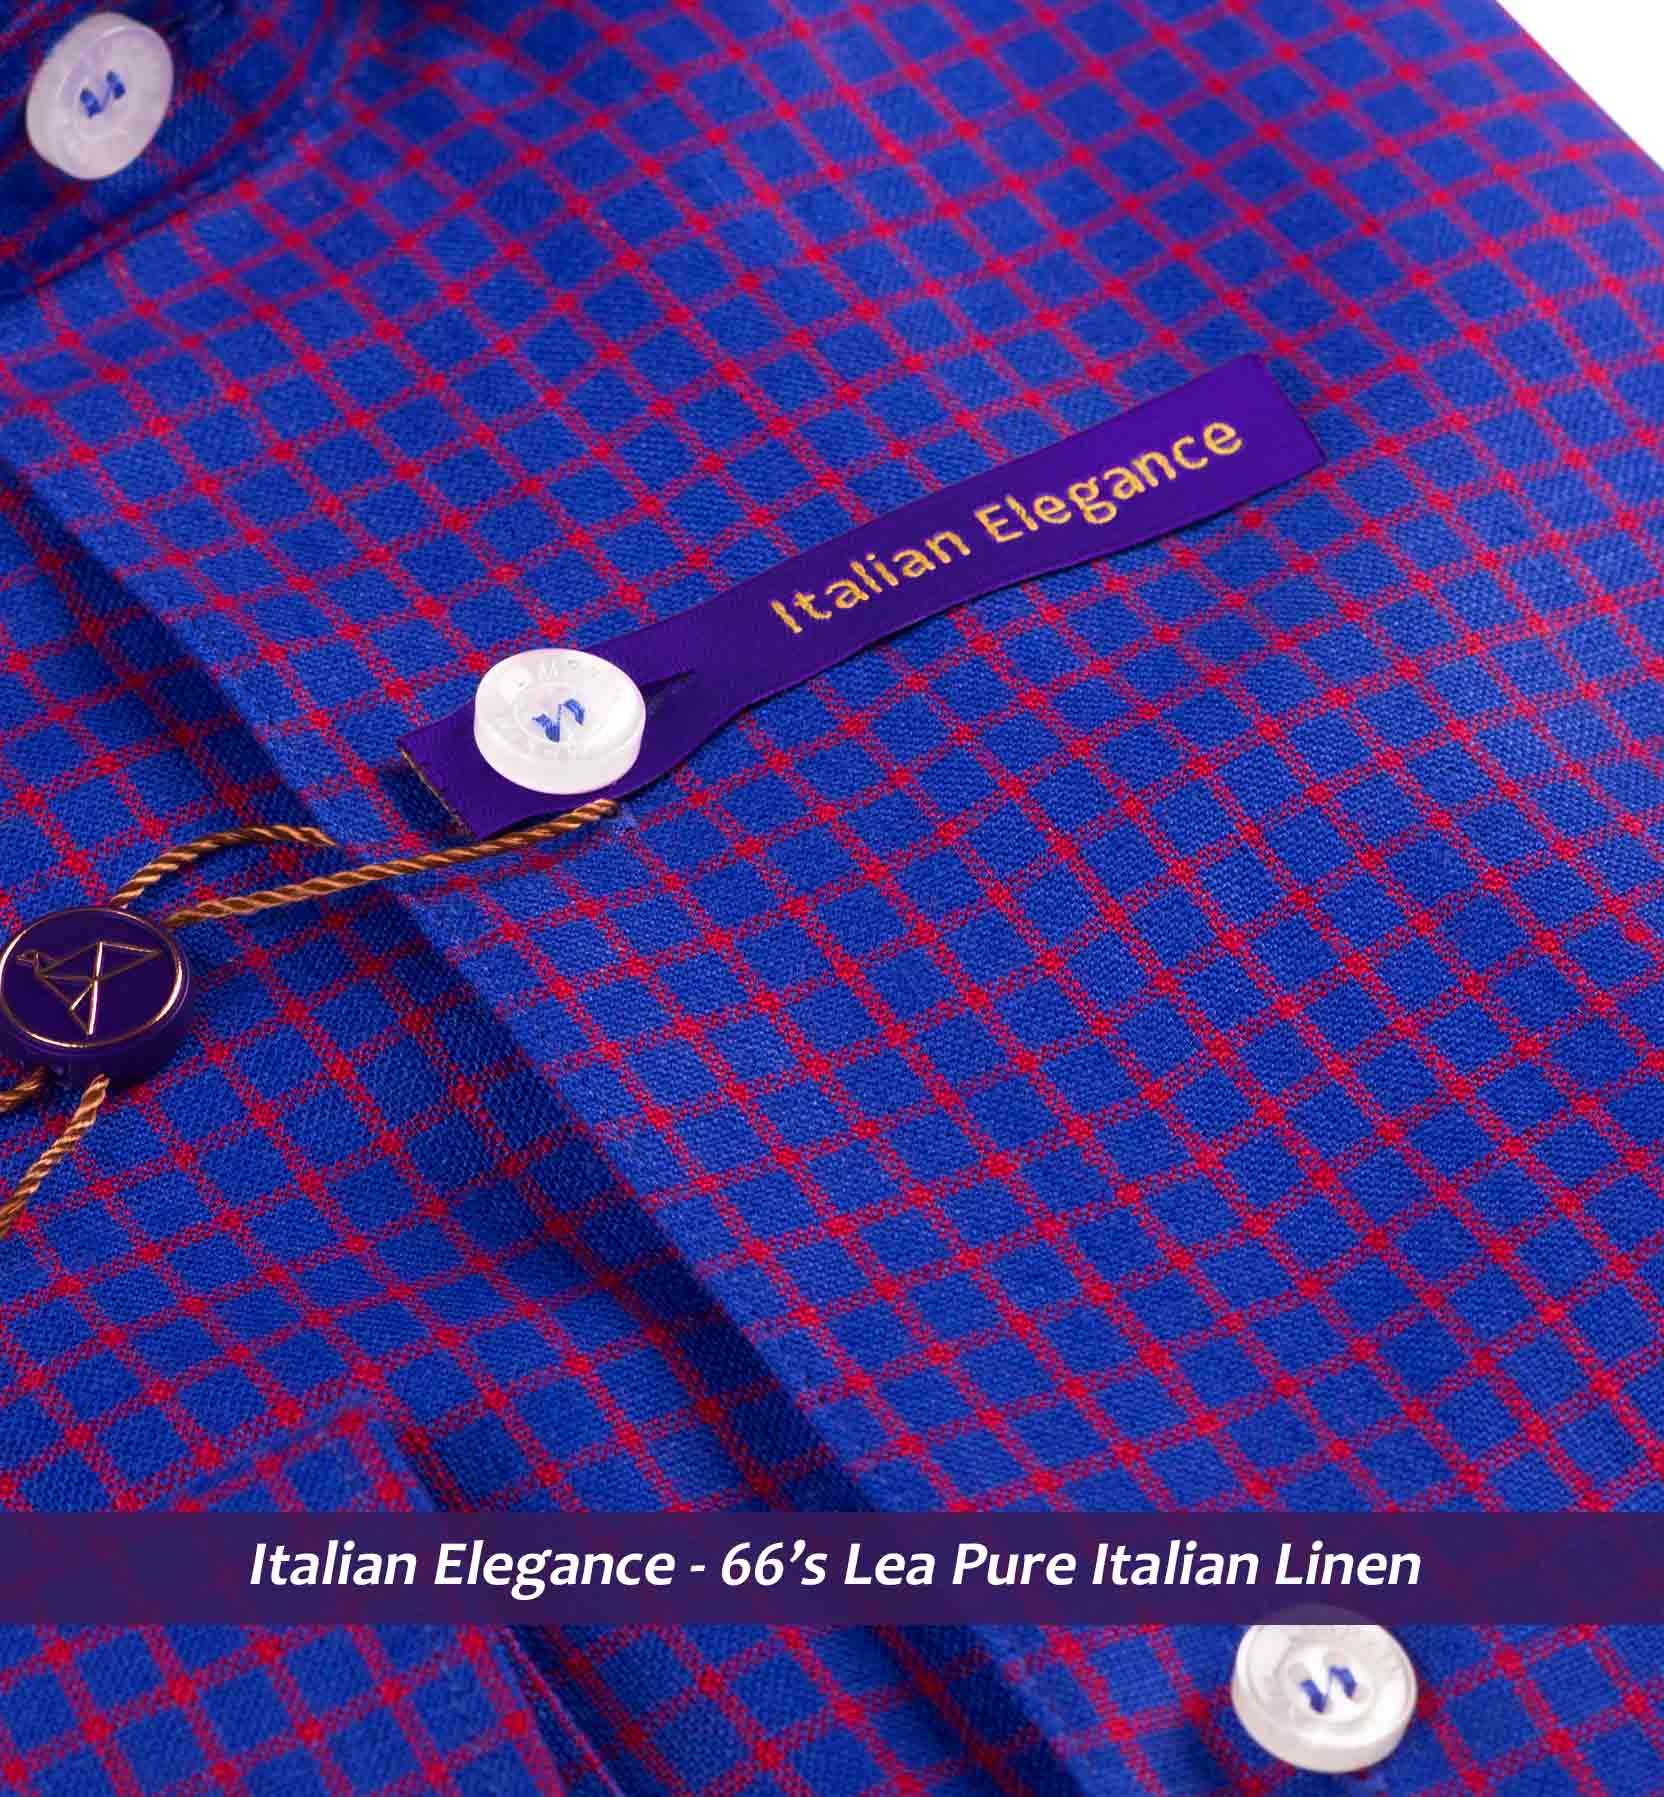 Deep Violet & Burgundy Magical Check- 66's Lea Pure Luxury Linen